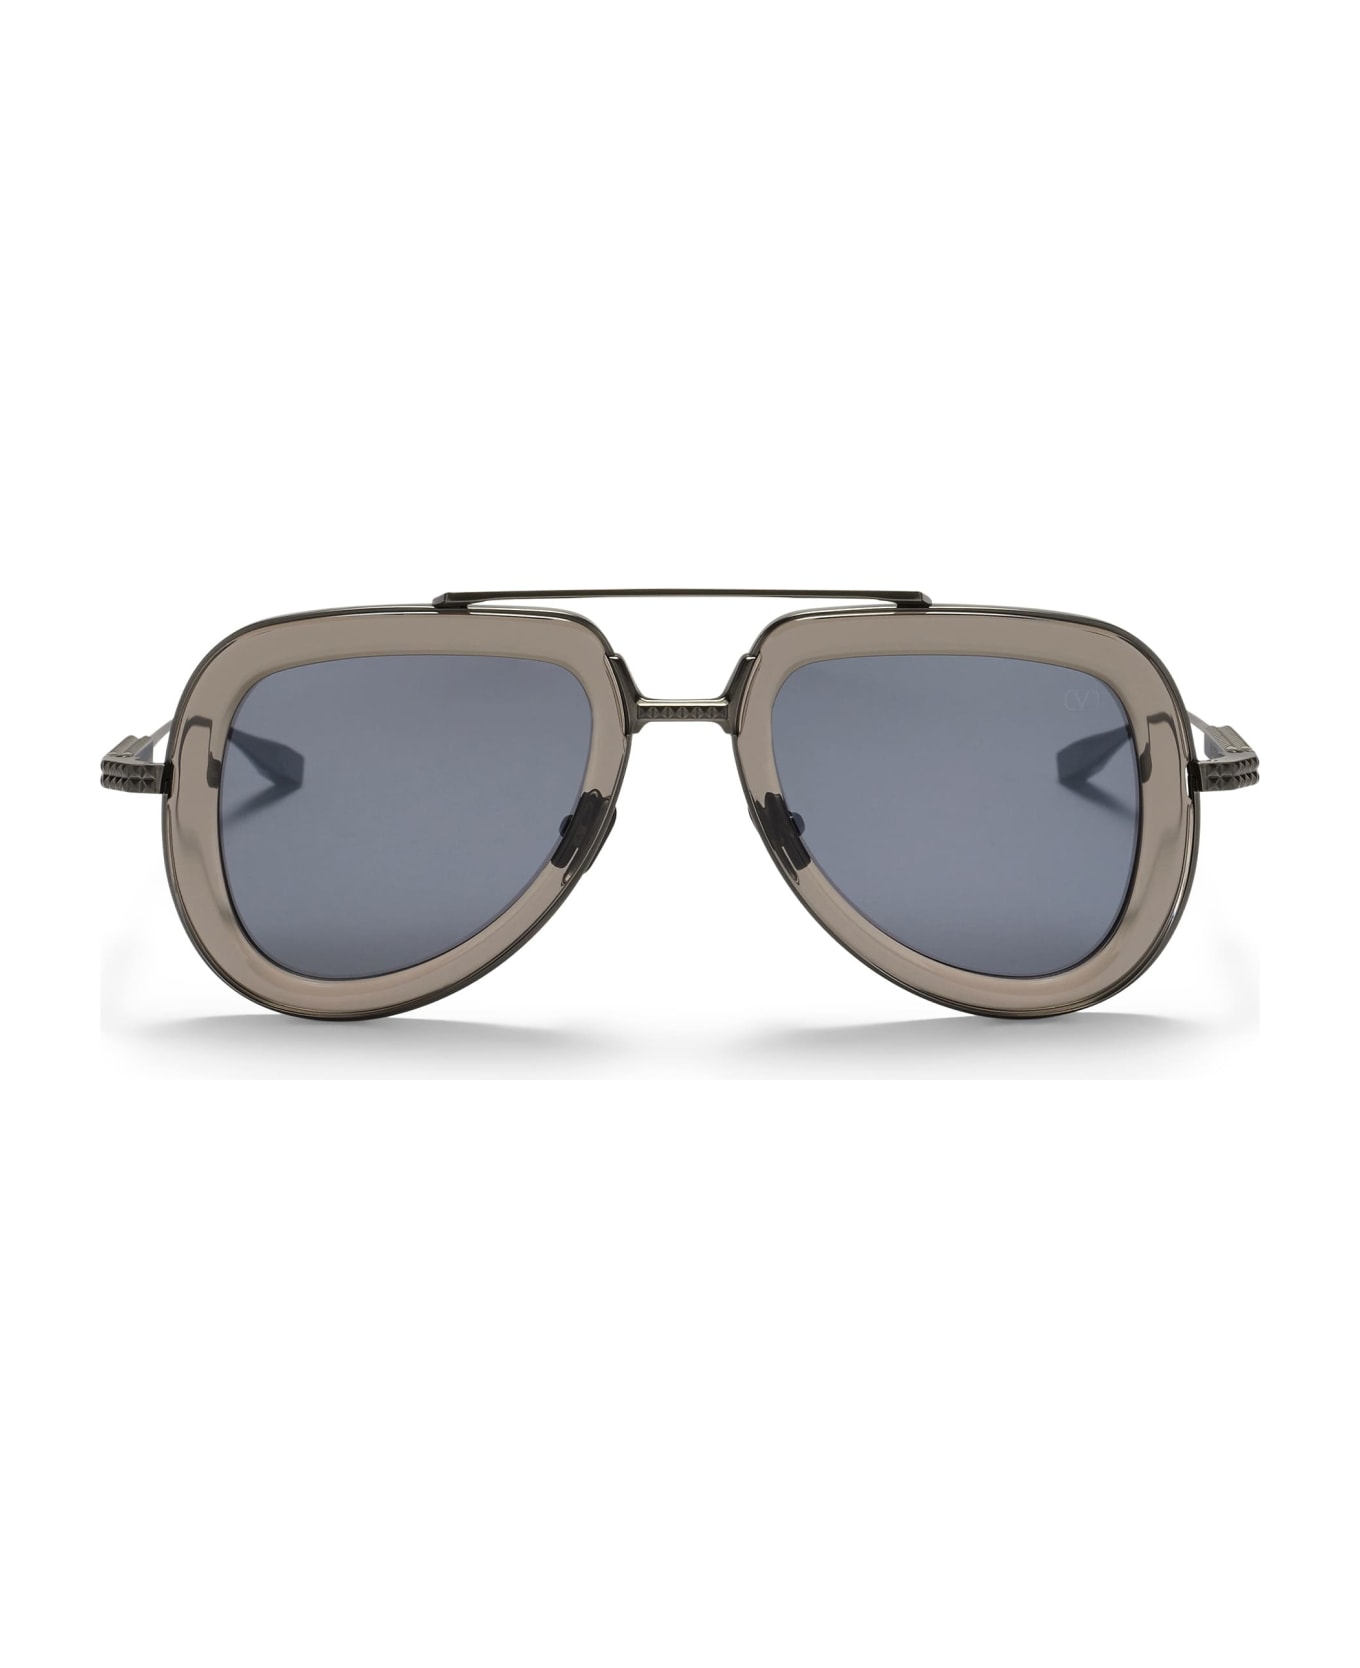 Valentino Eyewear V-lstory - Crystal Black / Brushed Black Sunglasses - grey